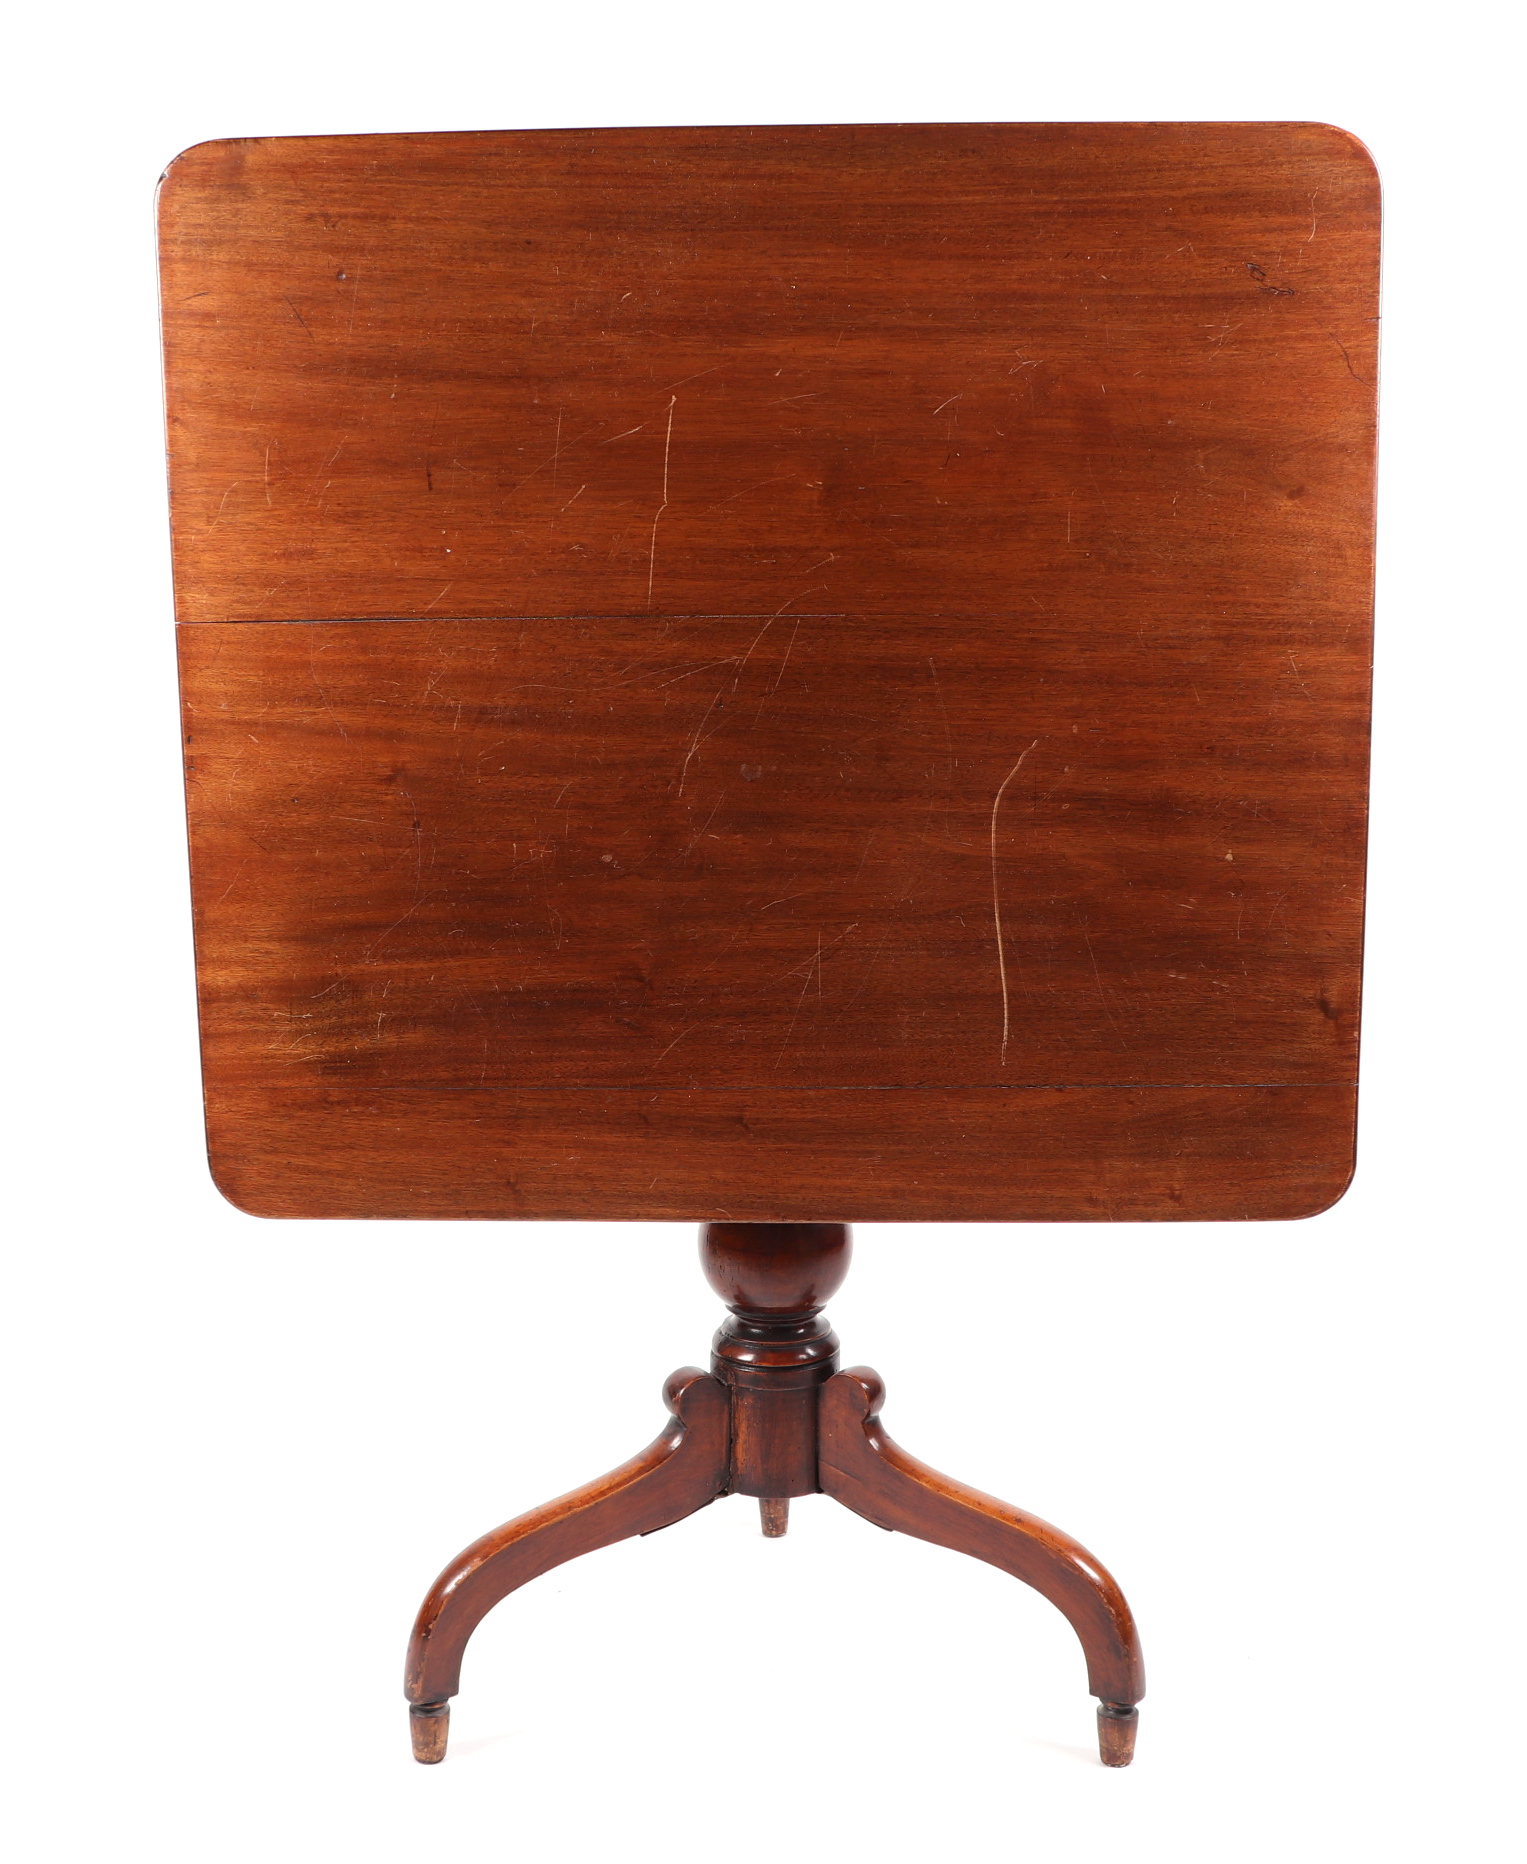 A 19th century mahogany tilt top tripod table, having rectangular top on turned column, 72cm wide.